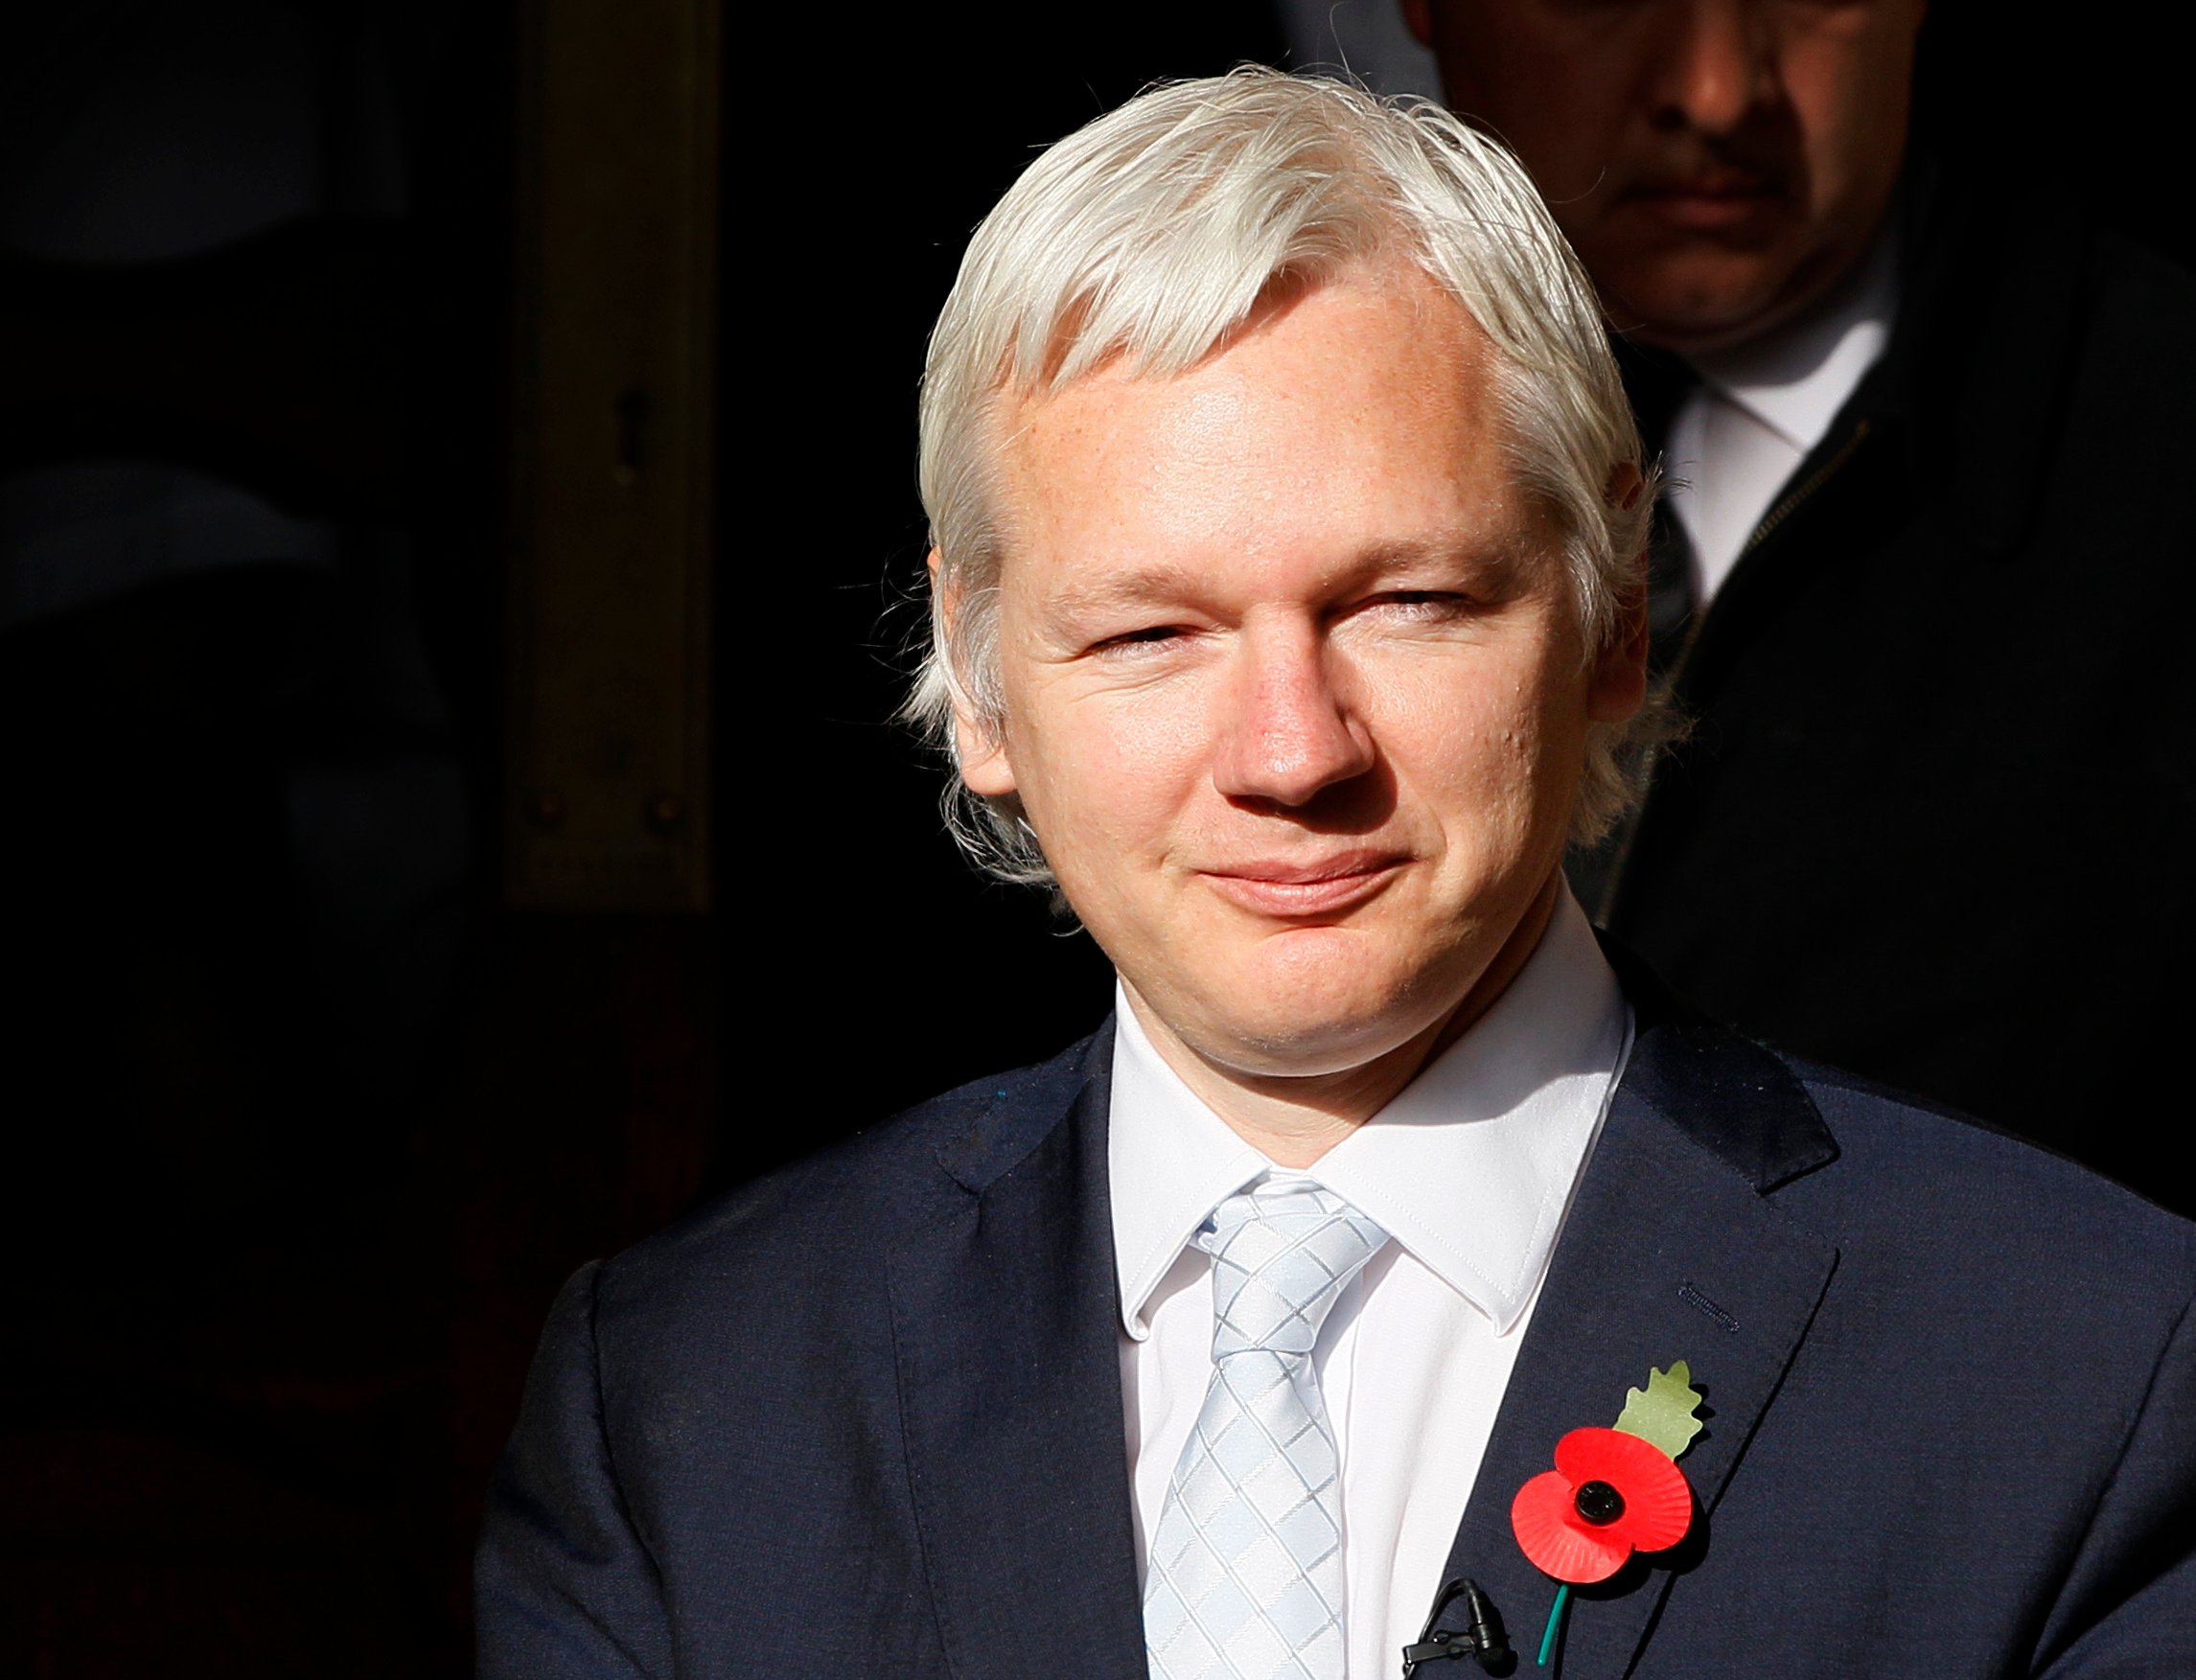 Sverige, Ecuador, Internet, USA, Wikileaks, Julian Assange, Utlämning